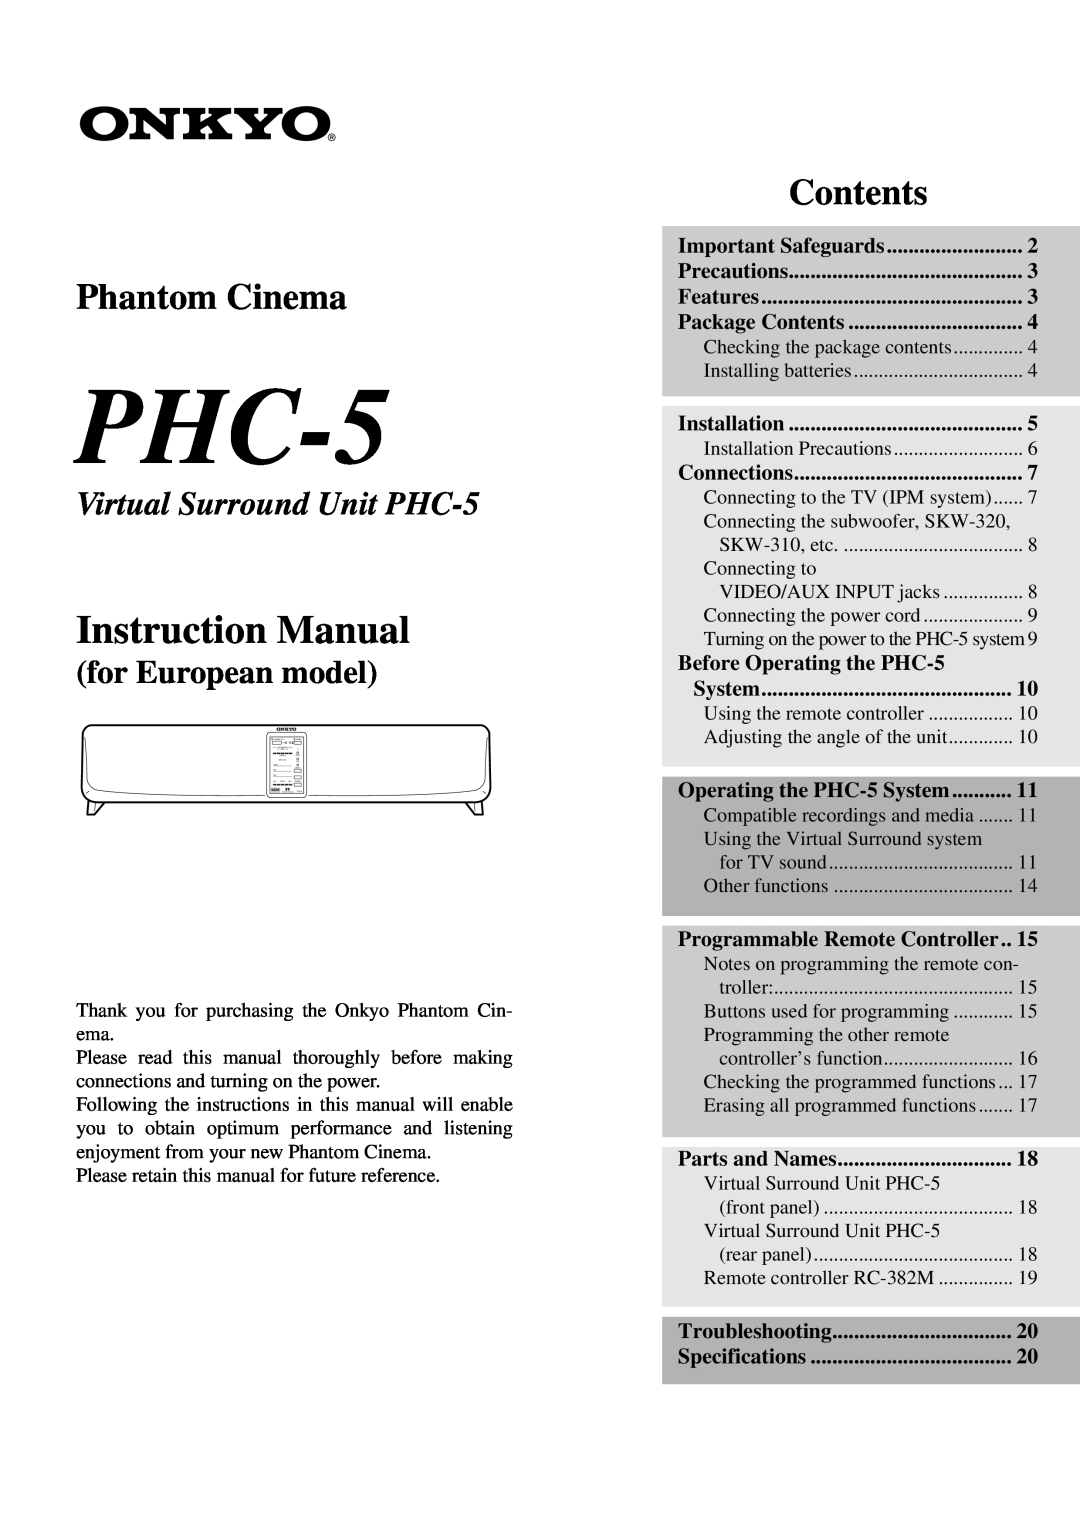 Onkyo instruction manual Phantom Cinema, Contents, Virtual Surround Unit PHC-5, for European model 